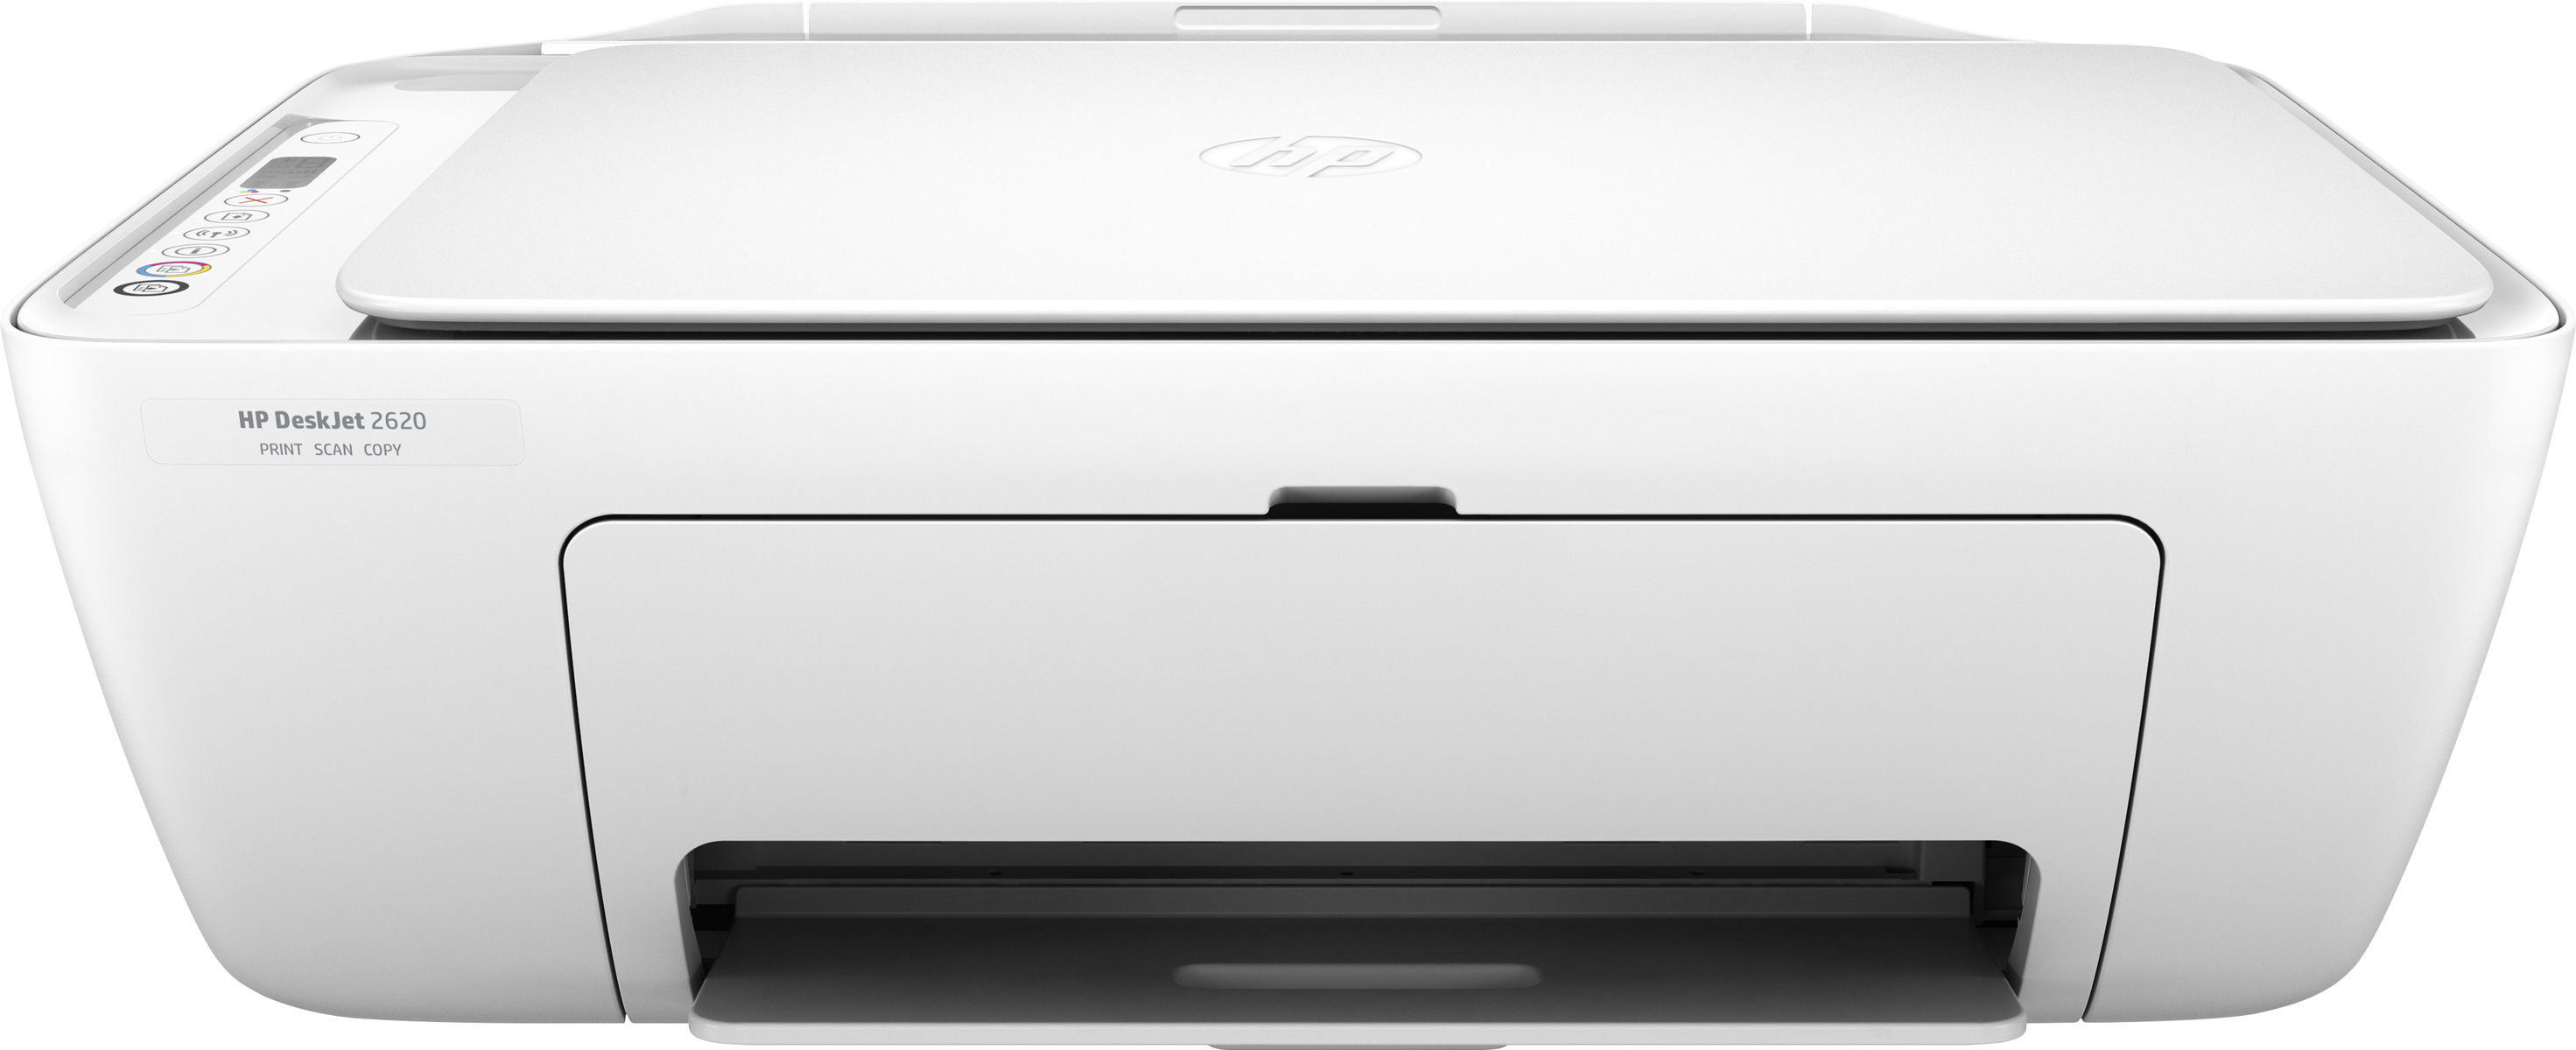 HP Multifunktionsdrucker WLAN 2620 Laser